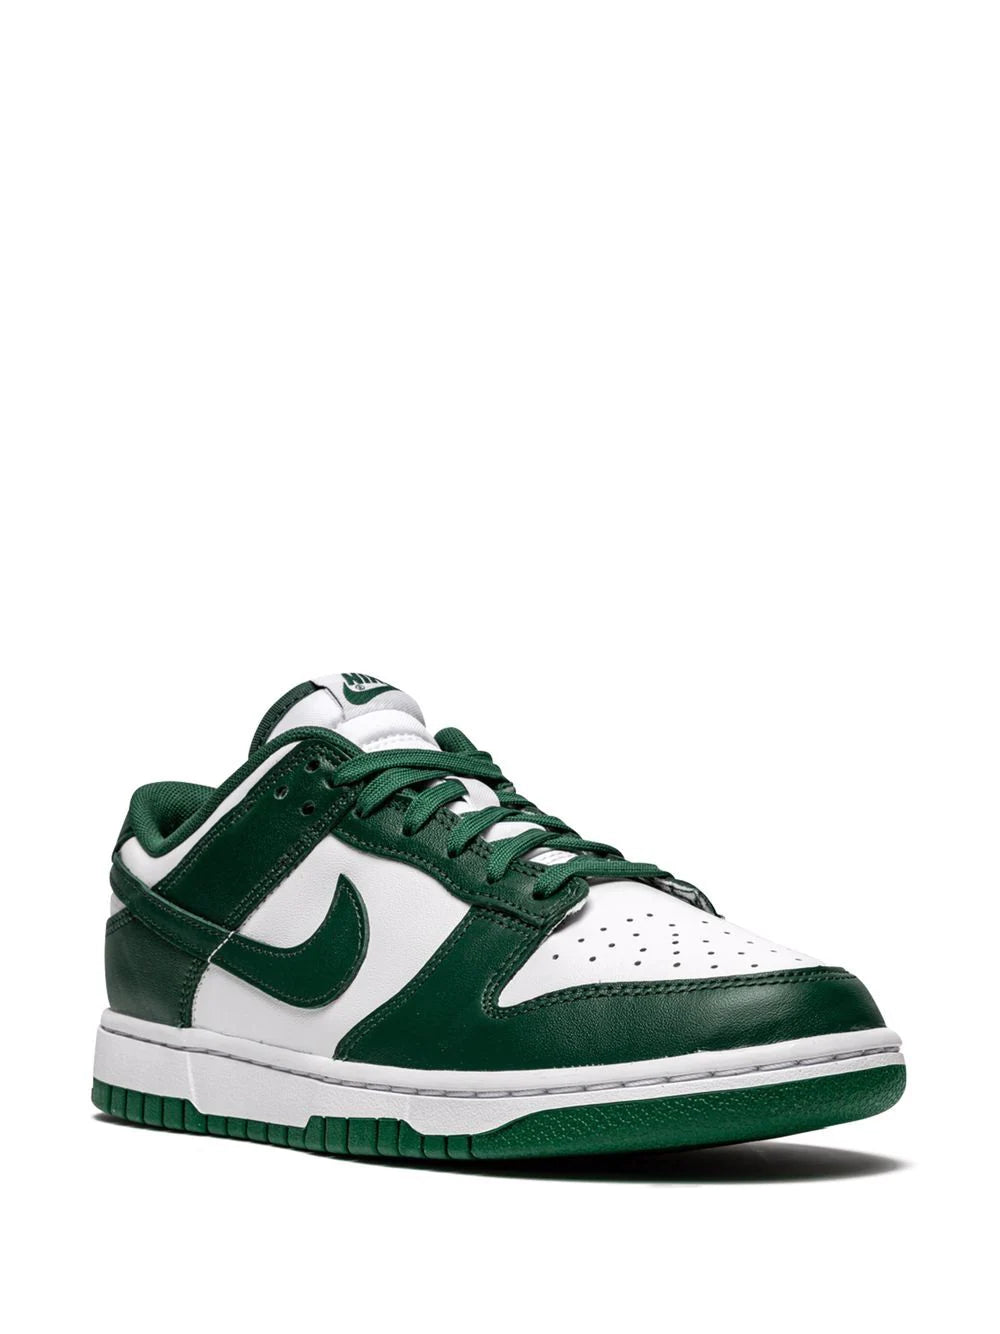 Nike Dunk Low "Team Green" sneakers